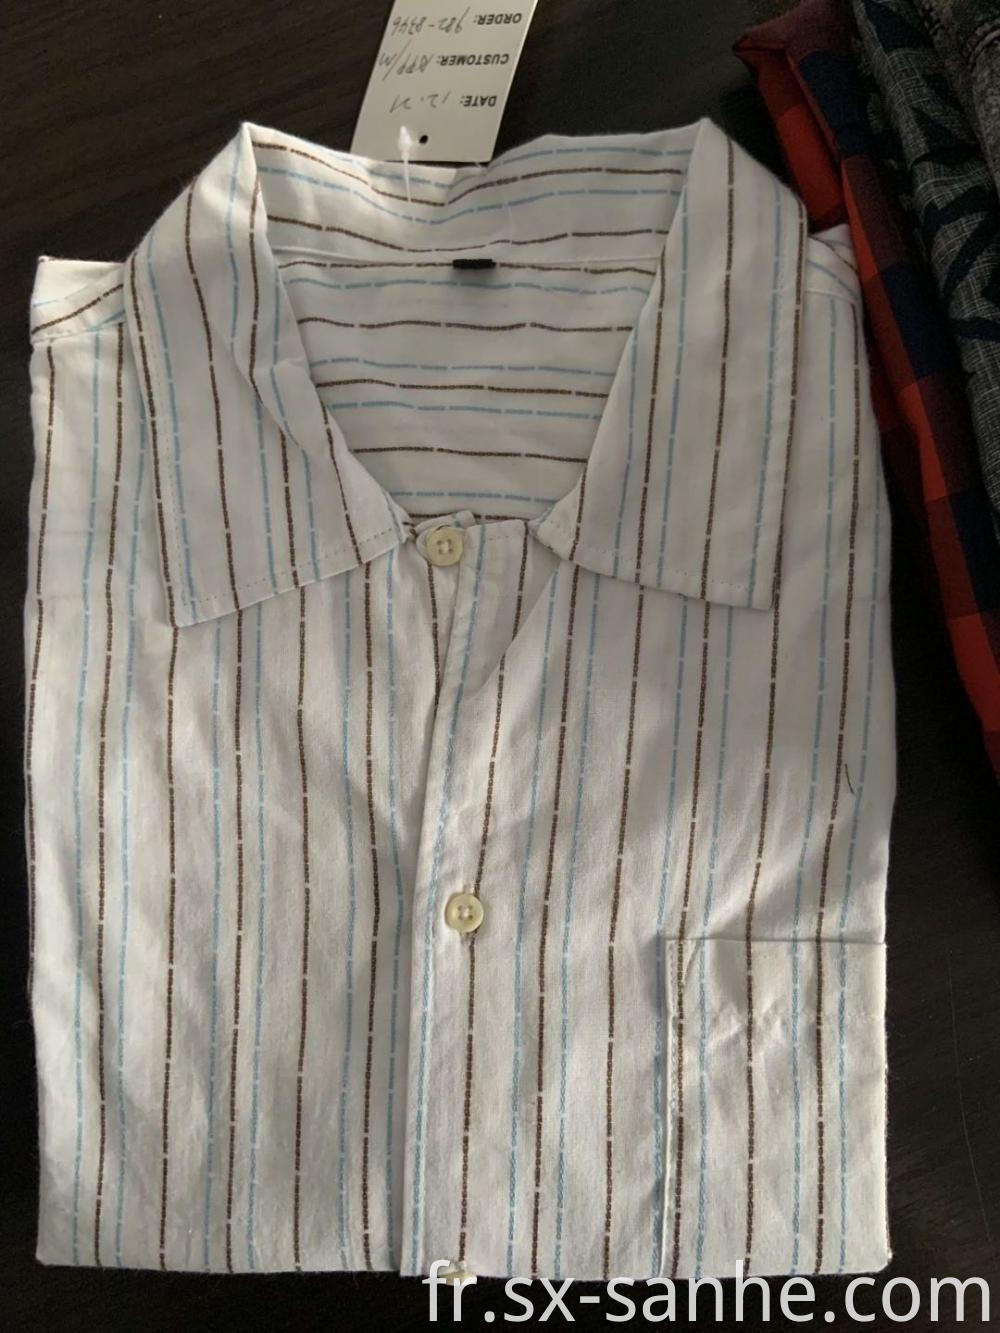 A Stylish Pinstripe Cotton Shirt For Men